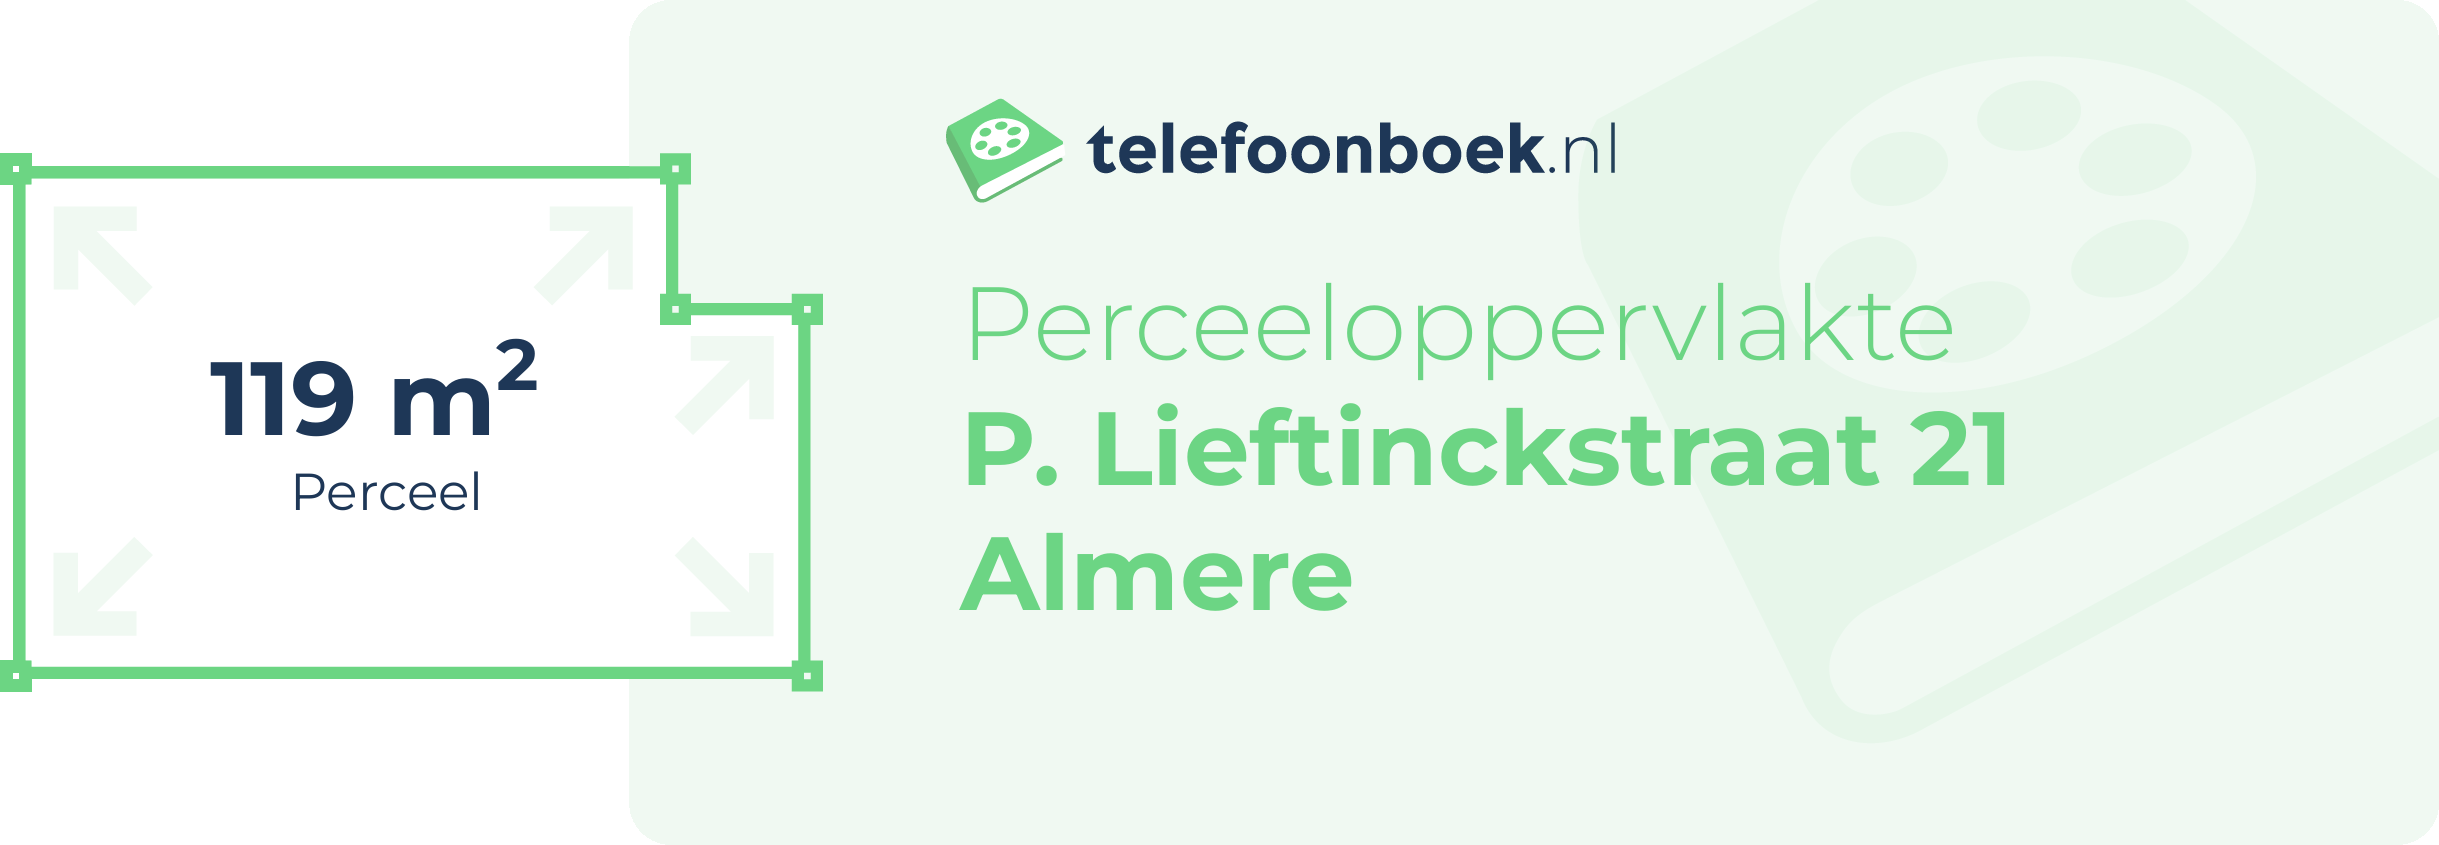 Perceeloppervlakte P. Lieftinckstraat 21 Almere